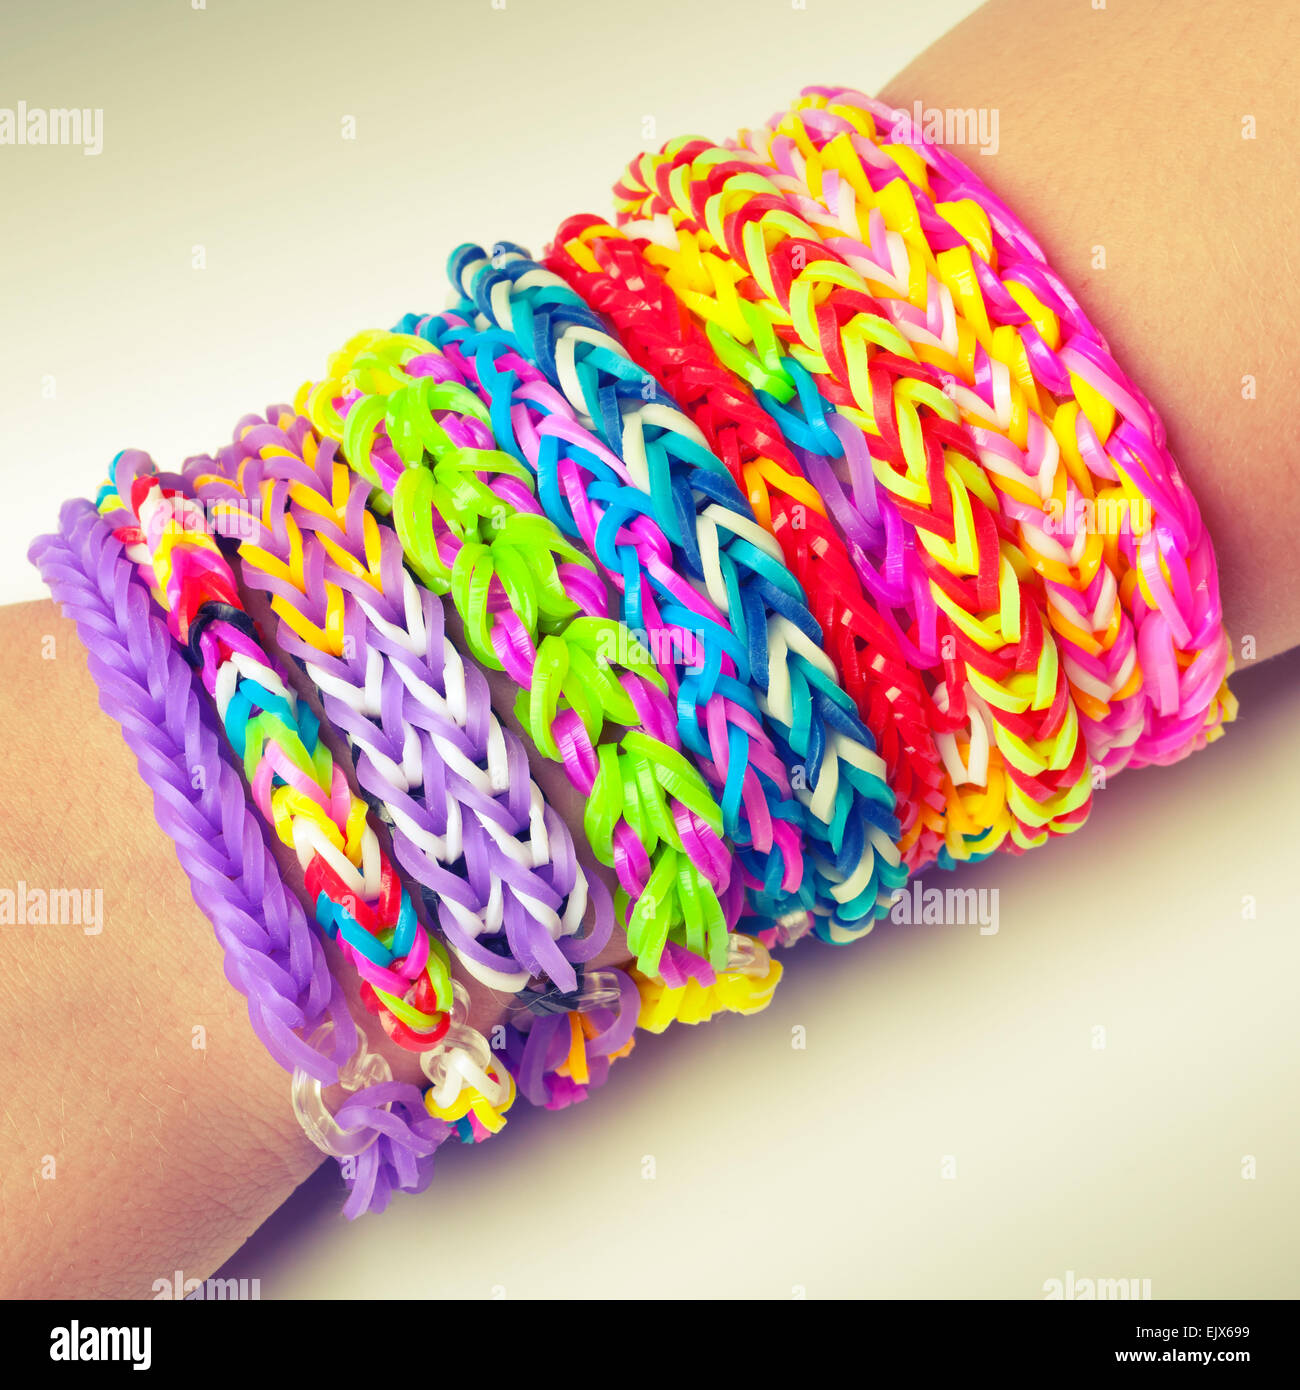 Loom band bracelet -Fotos und -Bildmaterial in hoher Auflösung – Alamy